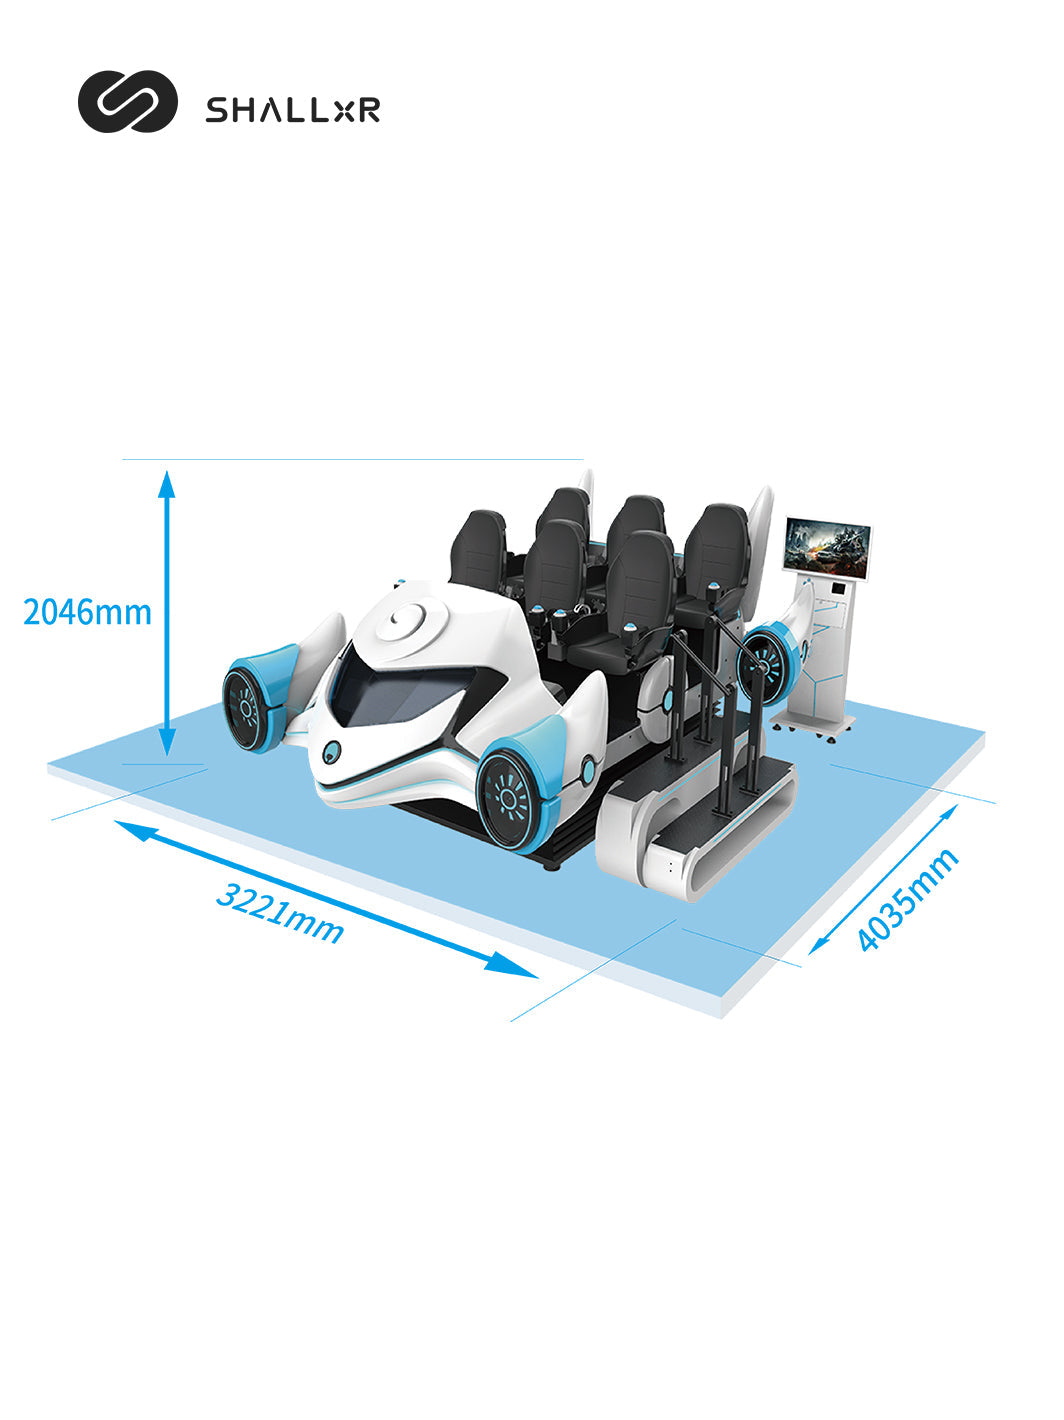 VR Warship 9D VR cinema - ShallxR